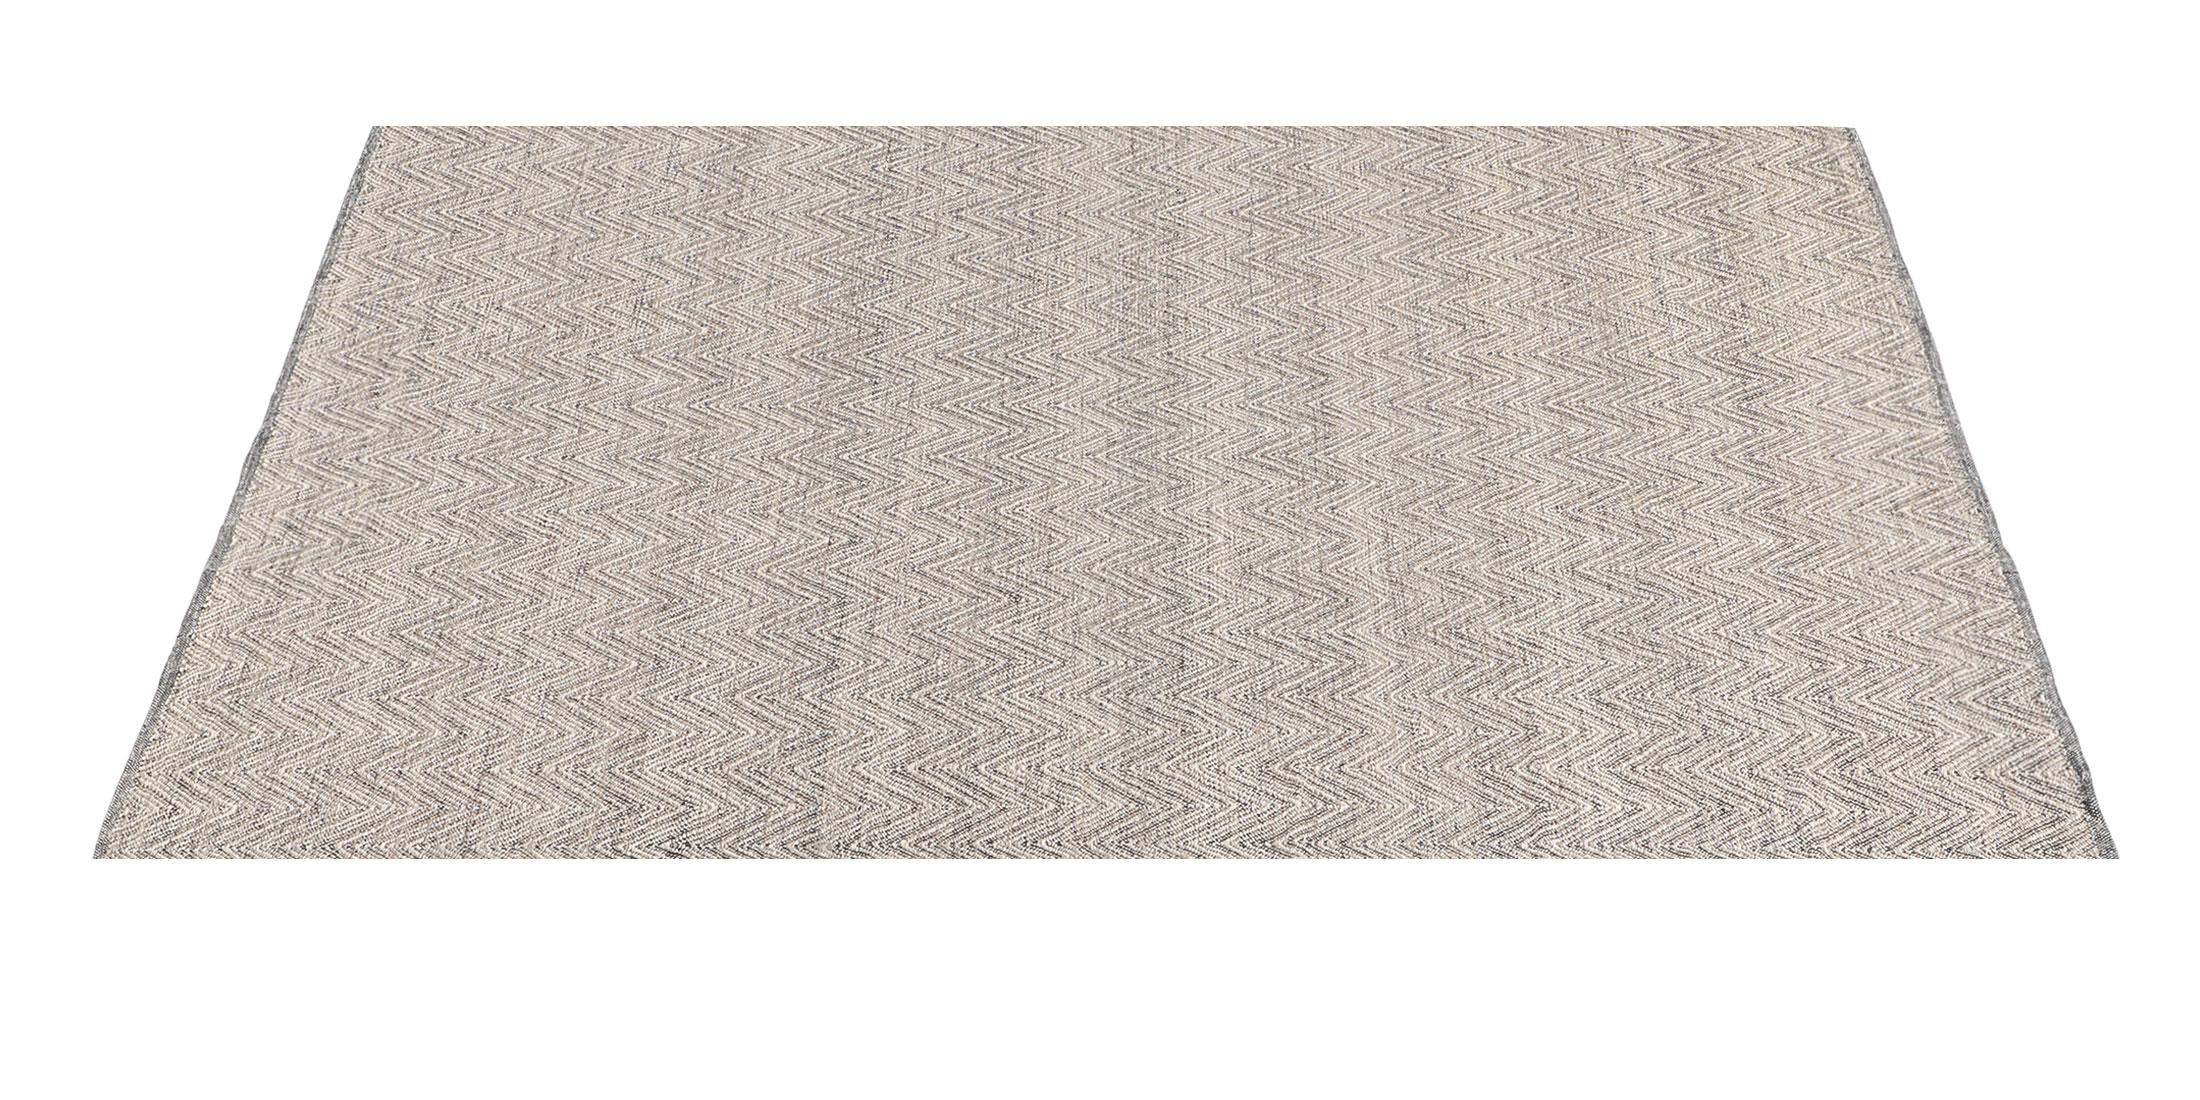 For Sale: Beige (Sand) Ben Soleimani Ceyah Rug– Hand-woven Plush Textured Wool + Linen Charcoal 6'x9' 2